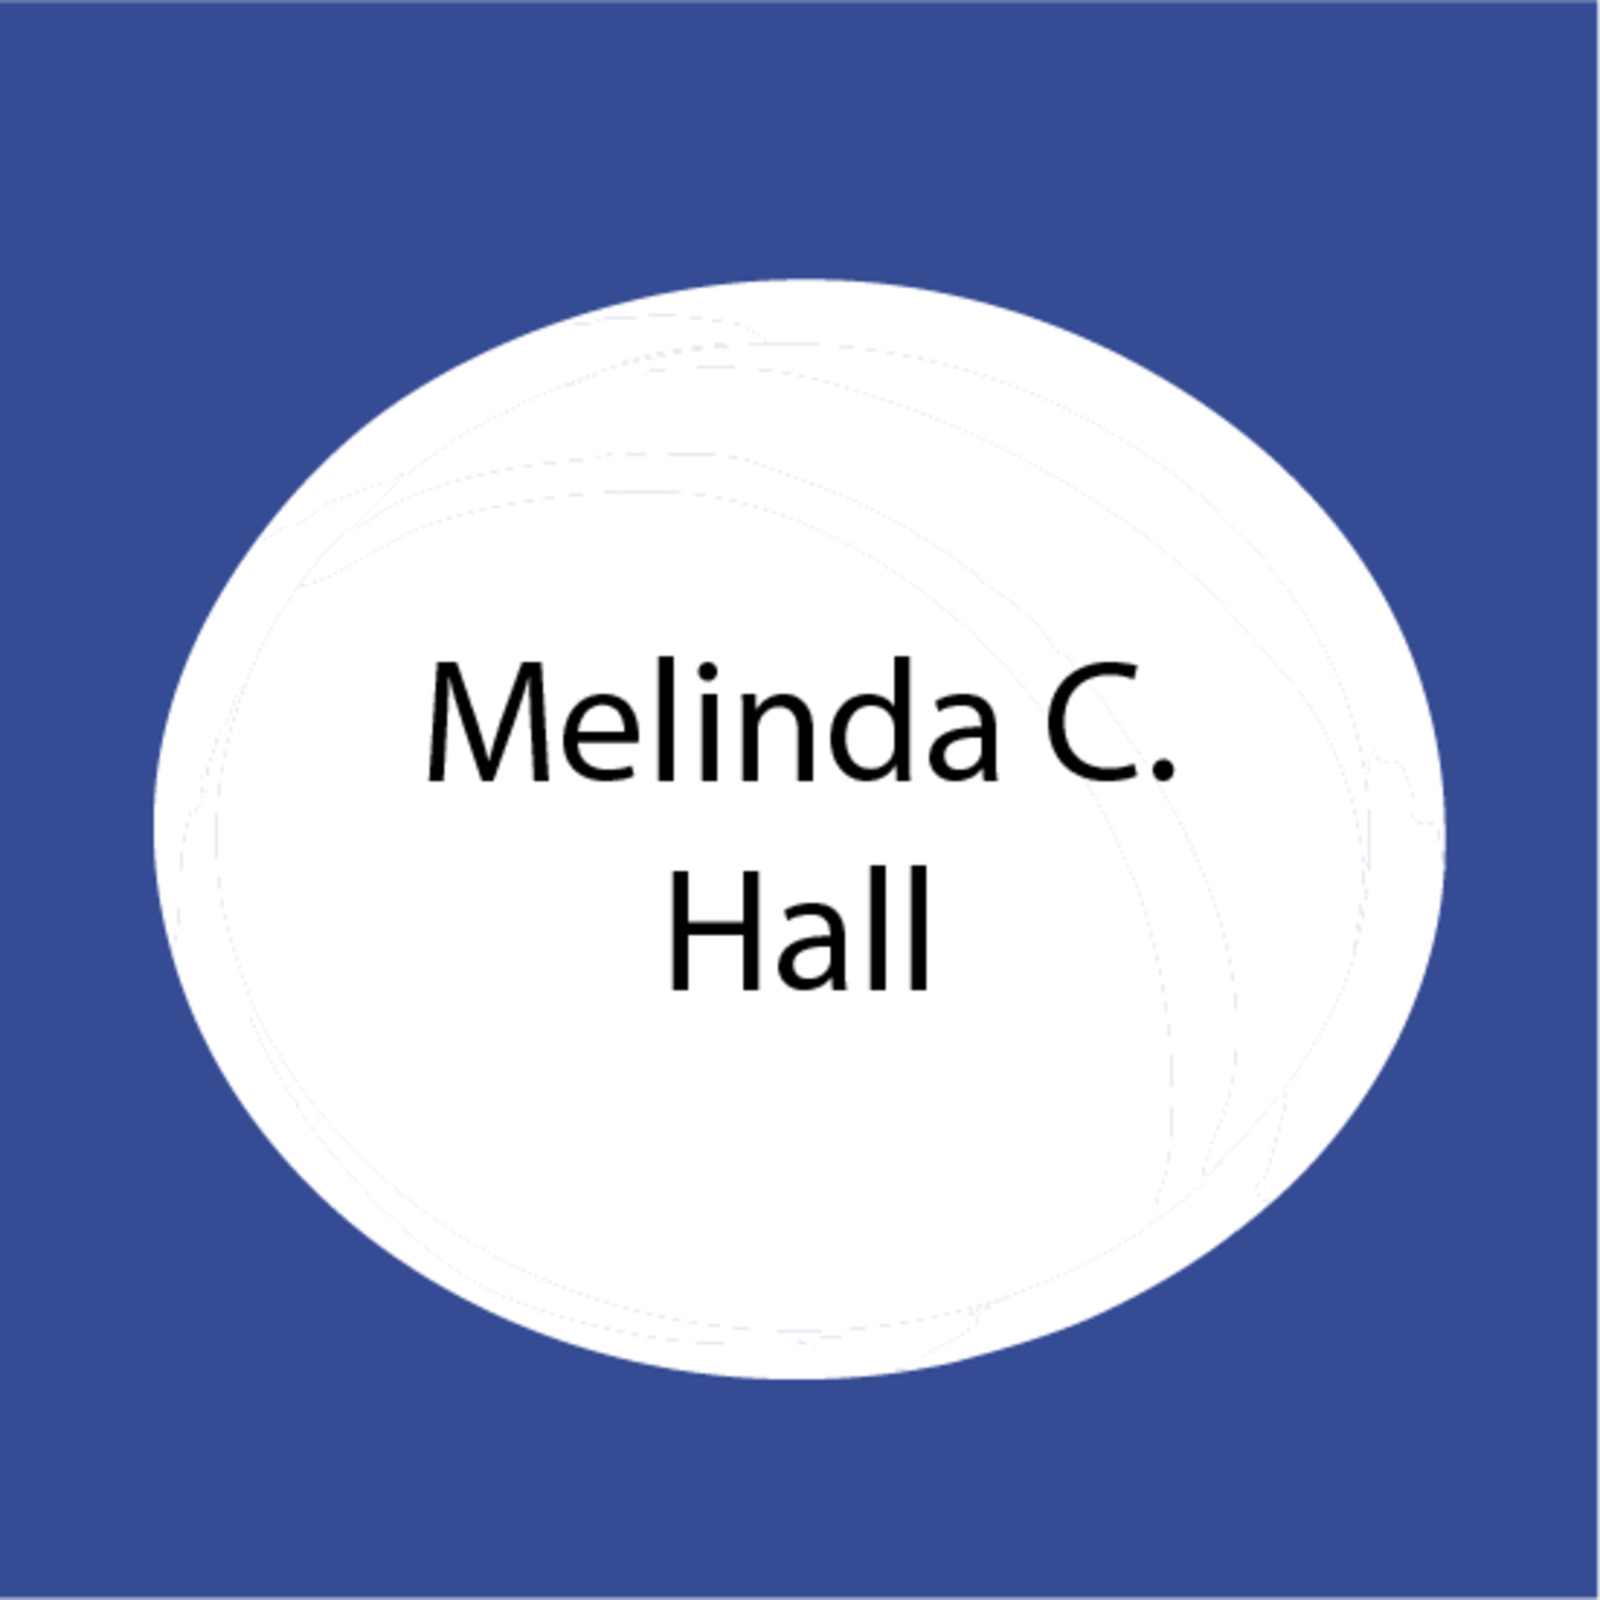 Melinda C. Hall.png